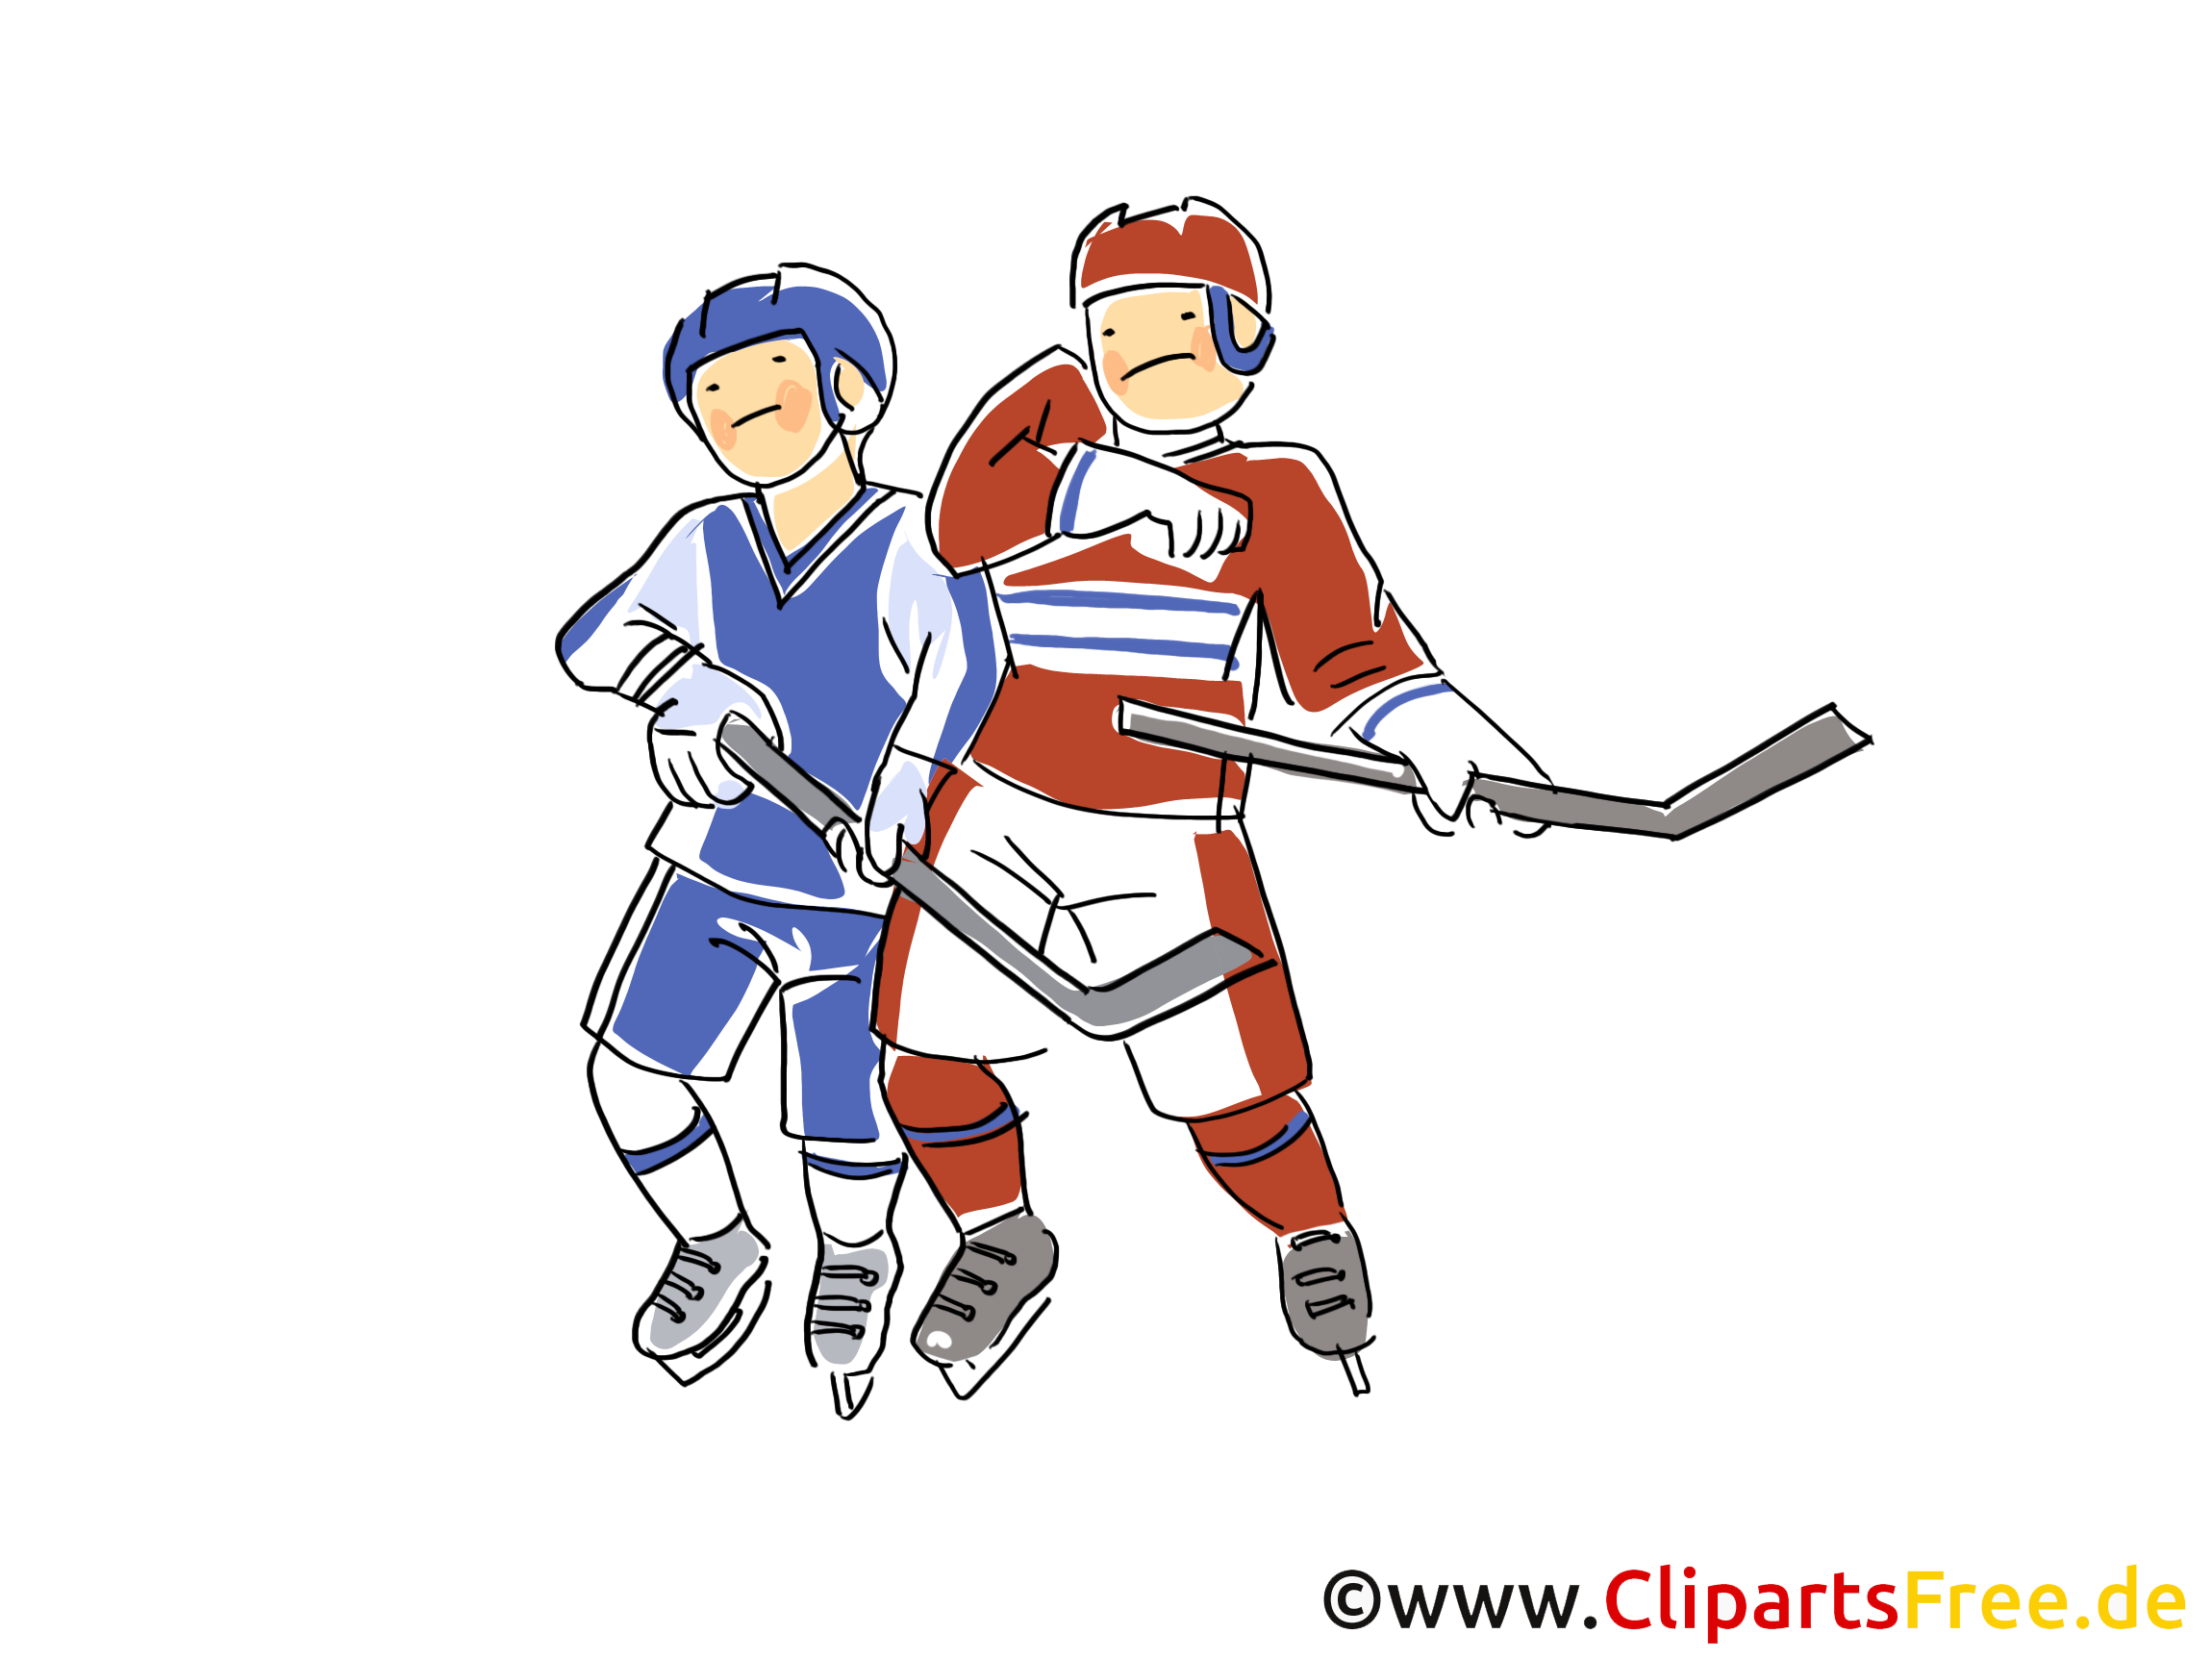 Hockeyeurs clipart - Hockey dessins gratuits